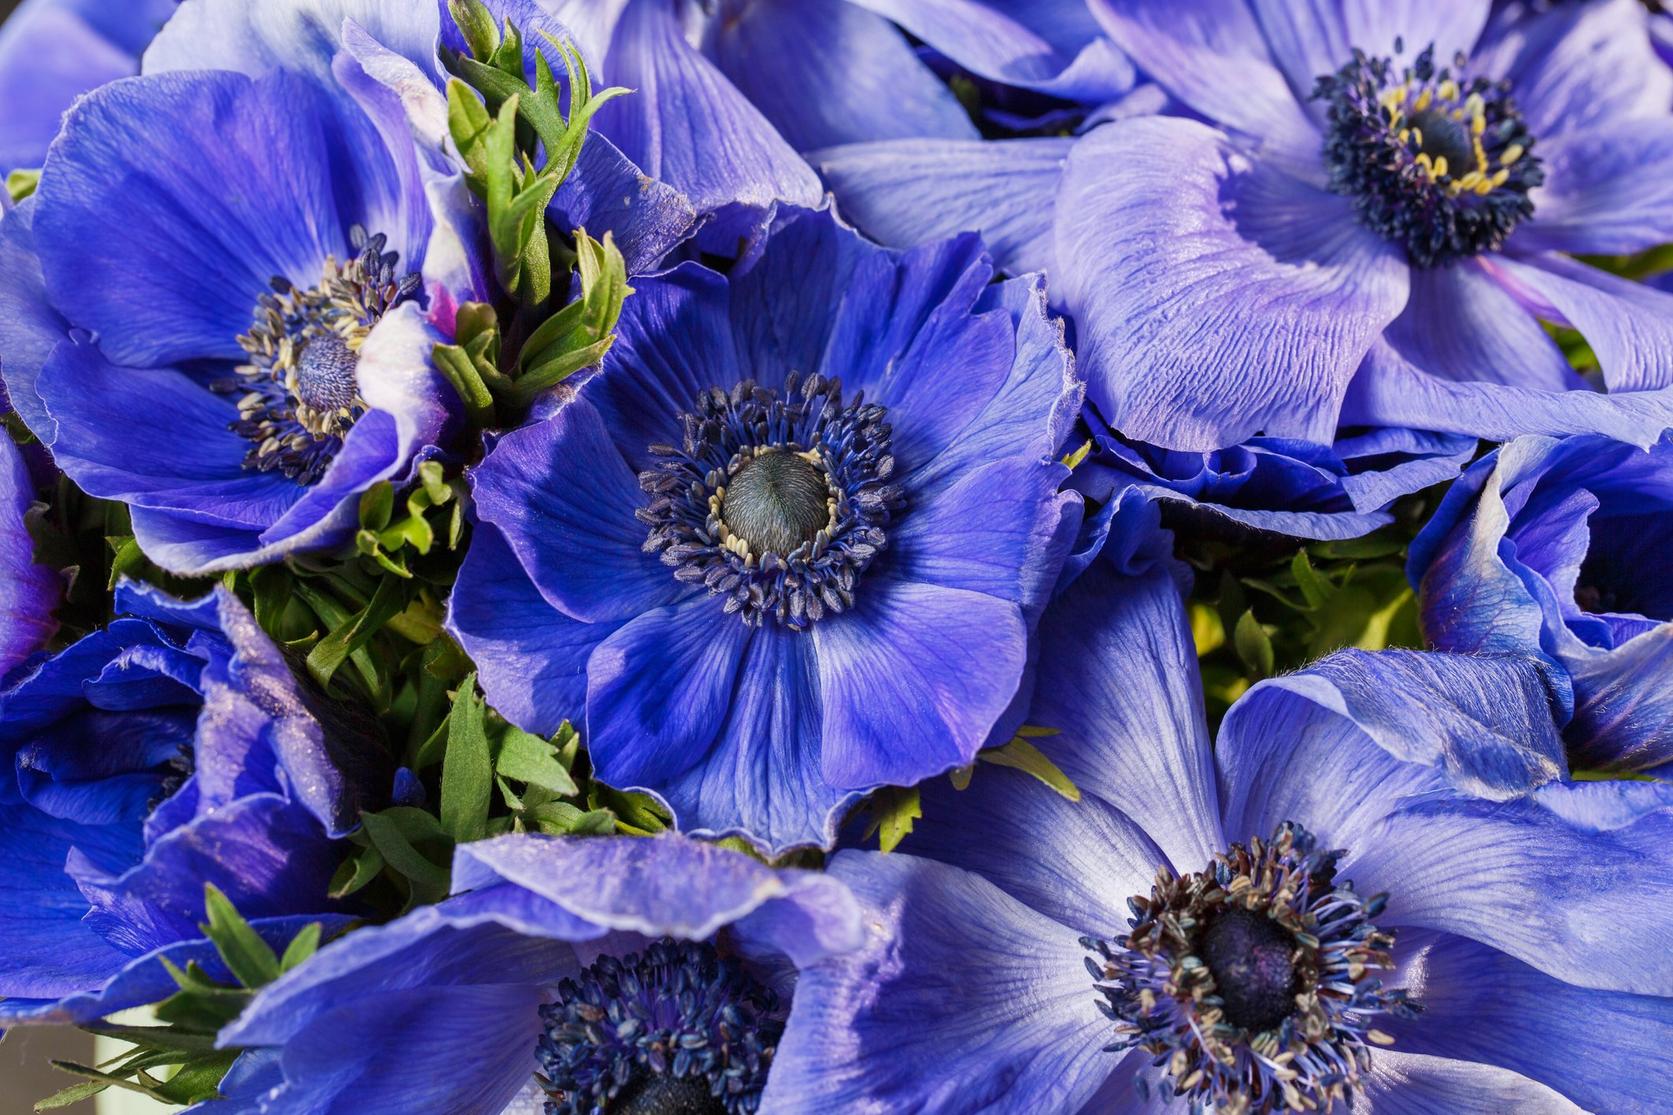 anenome-purple-flowers